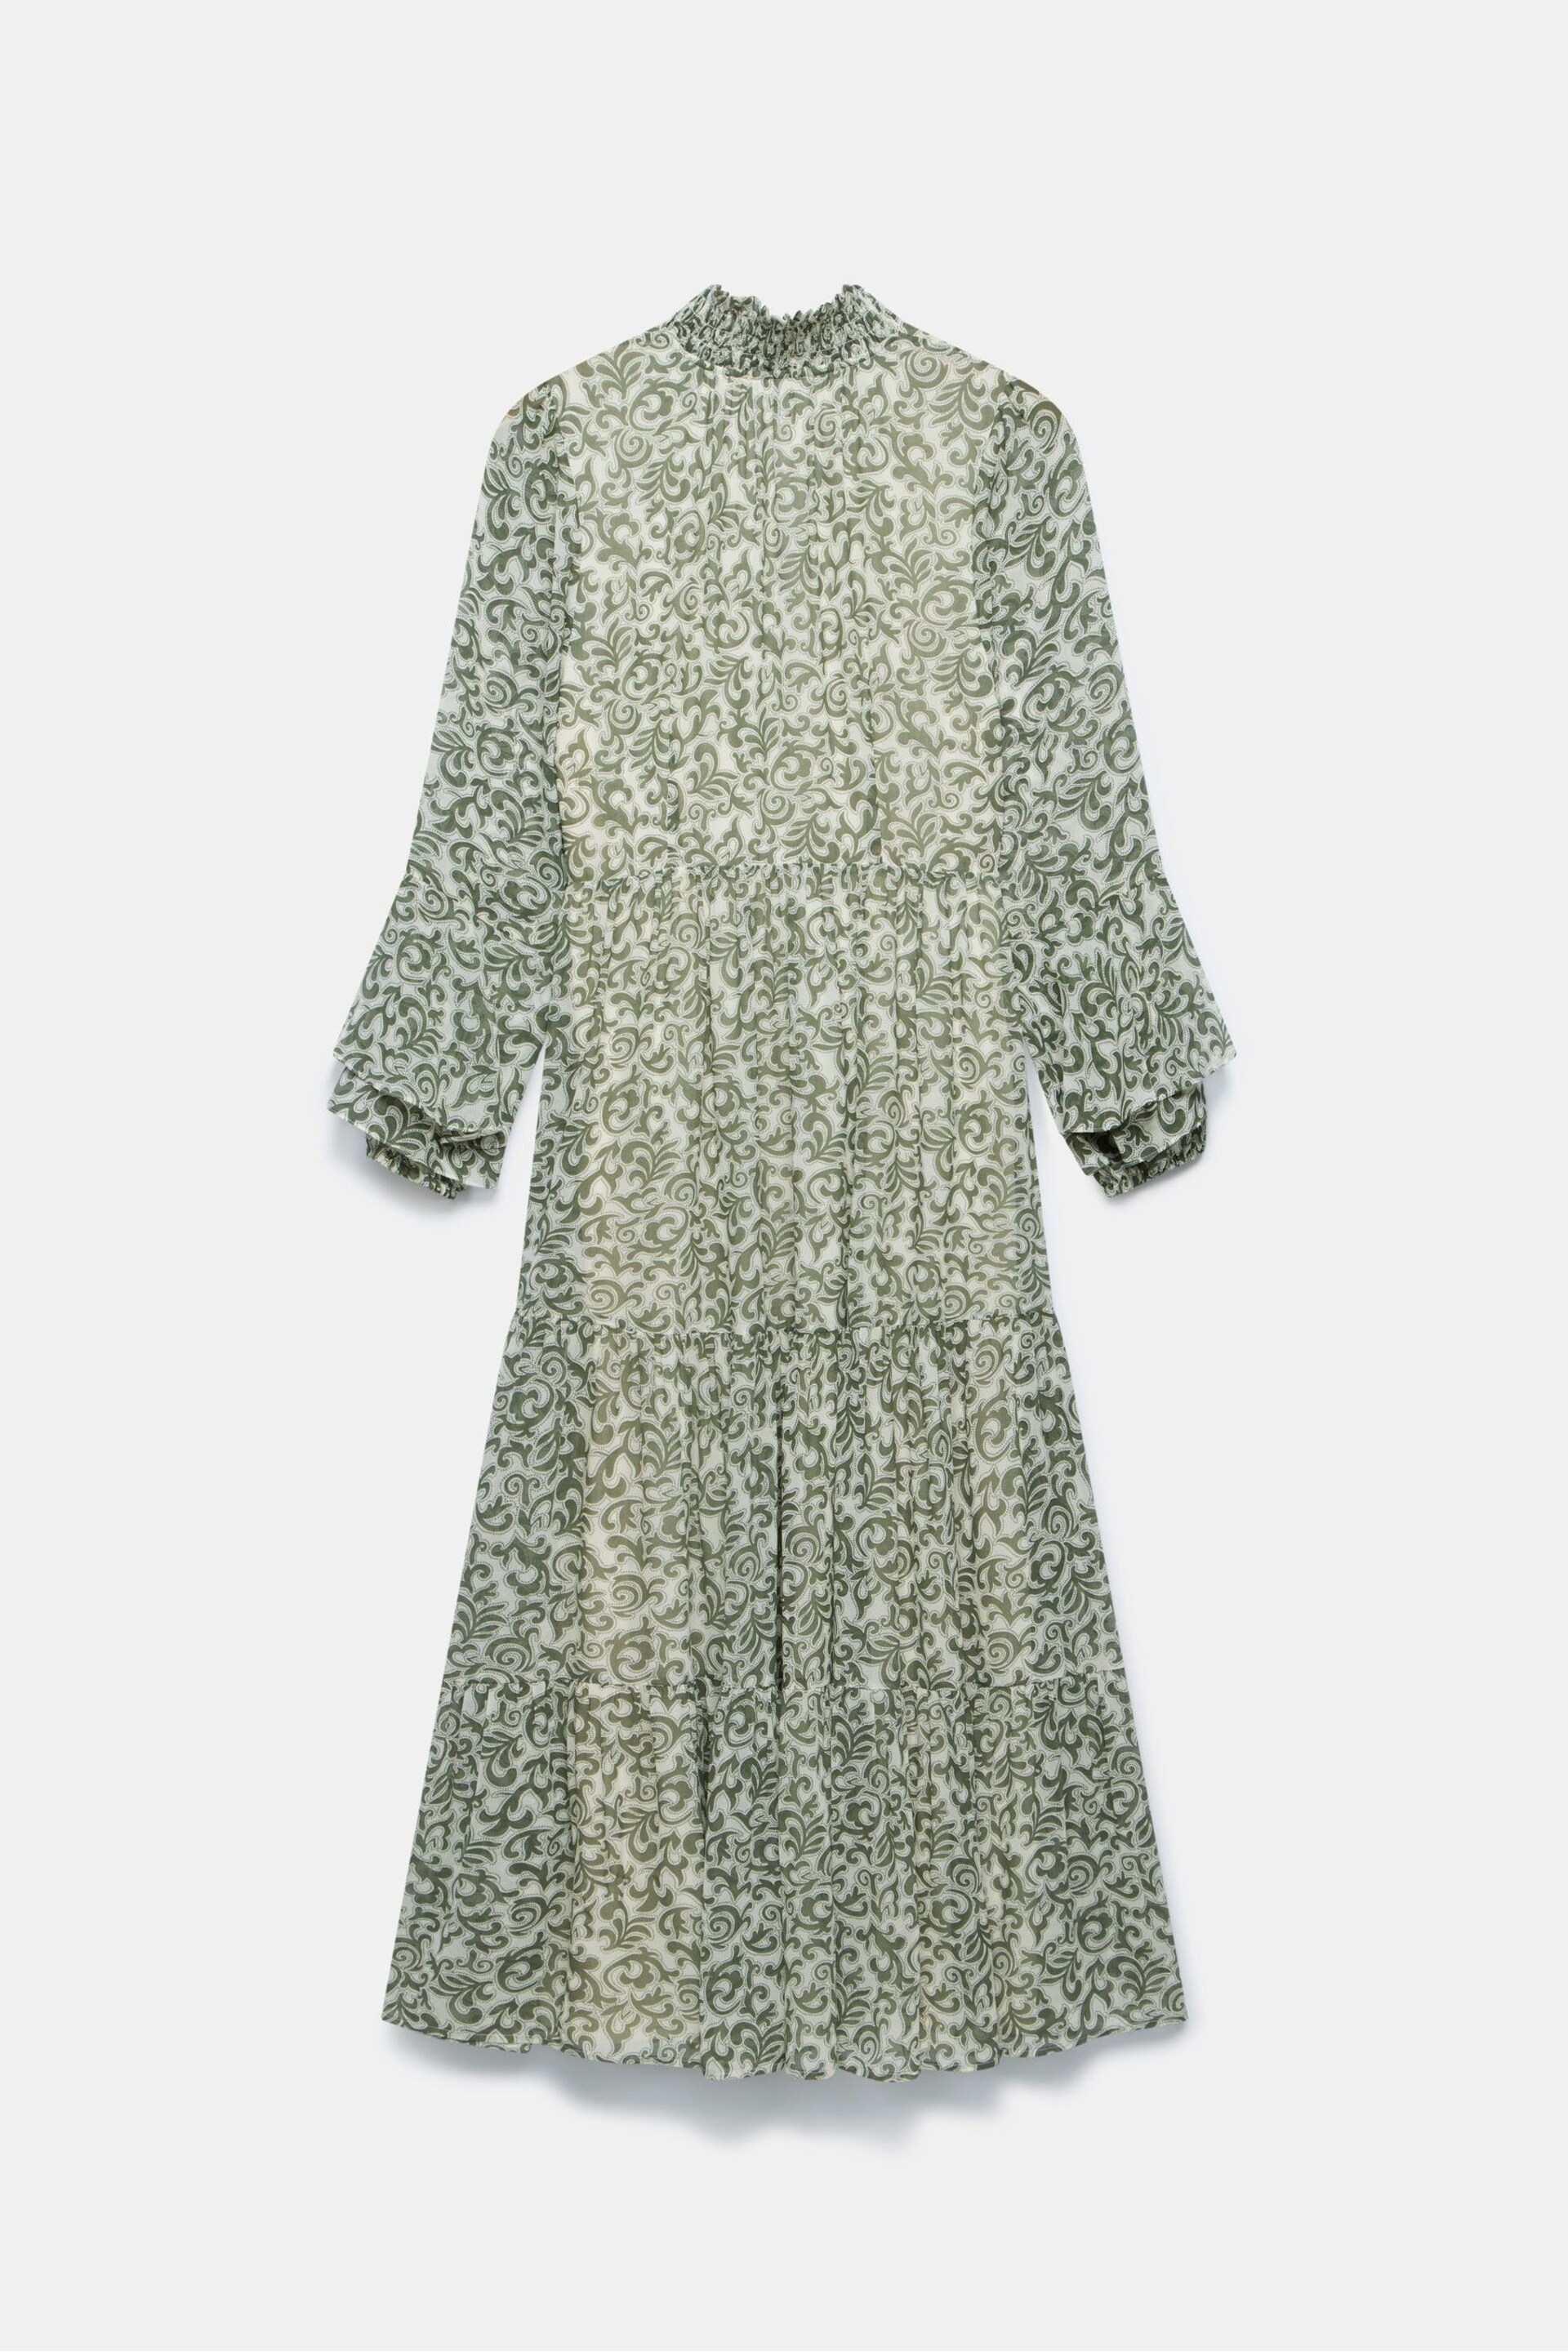 Mint Velvet Green Floral Print Maxi Dress - Image 4 of 4